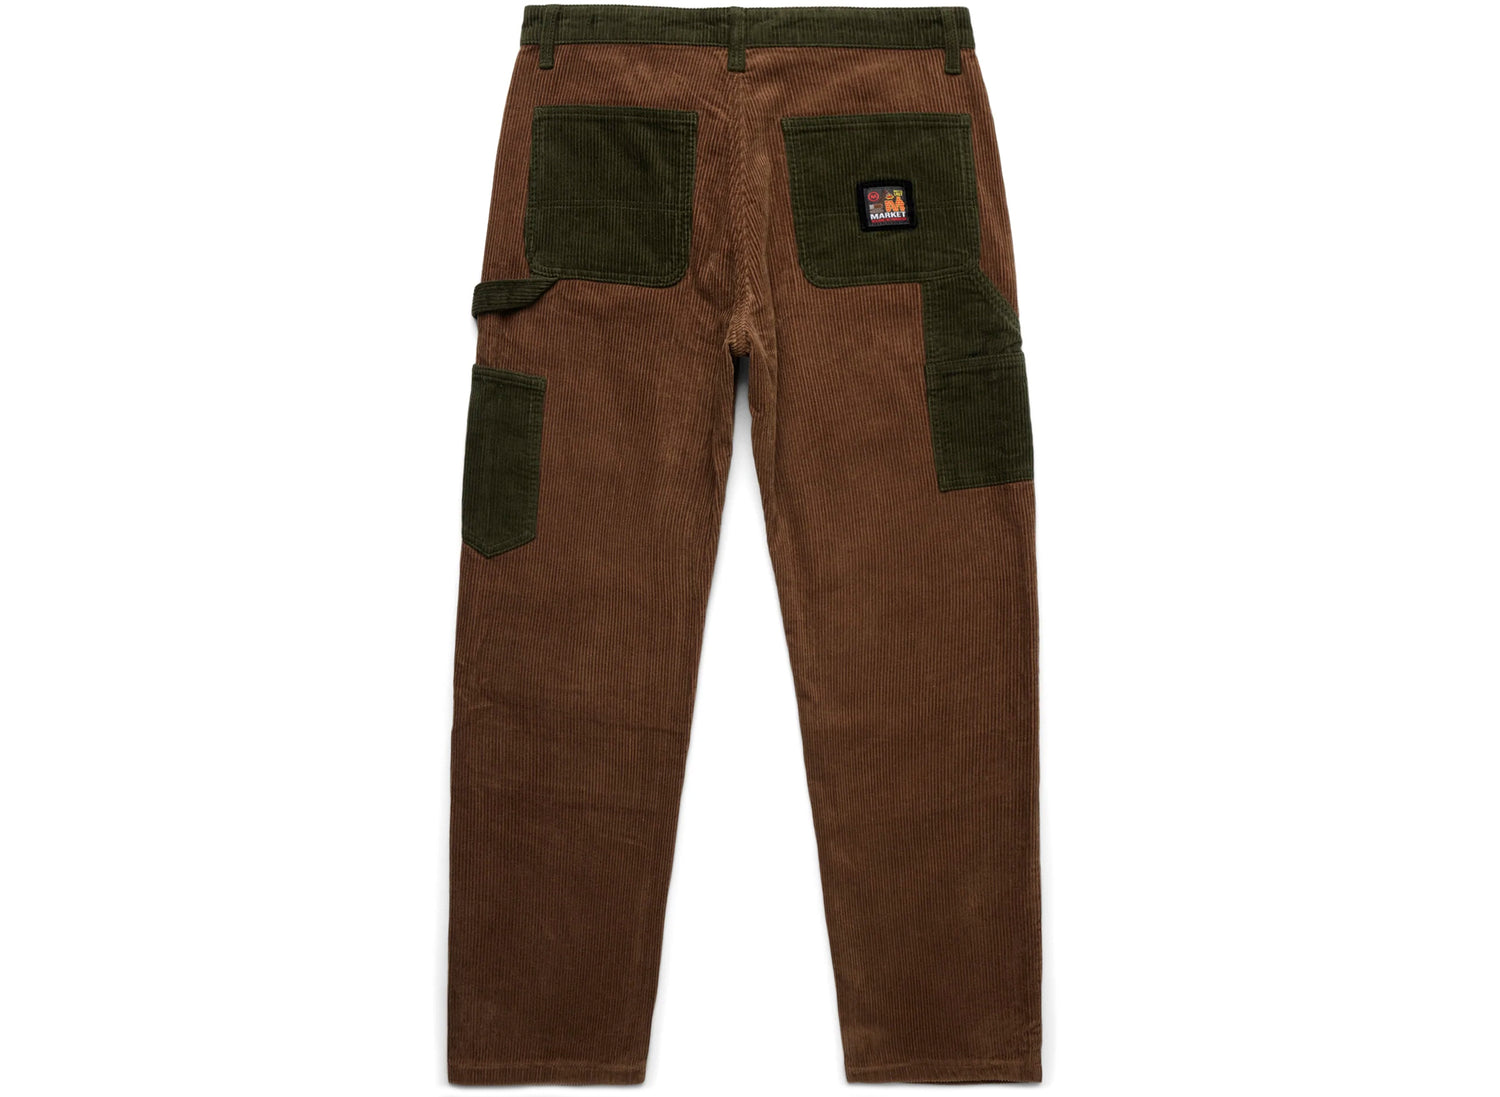 OLD NAVY Mens Jeans Corduroy Carpenter Pants 38x32 Brown VTG 